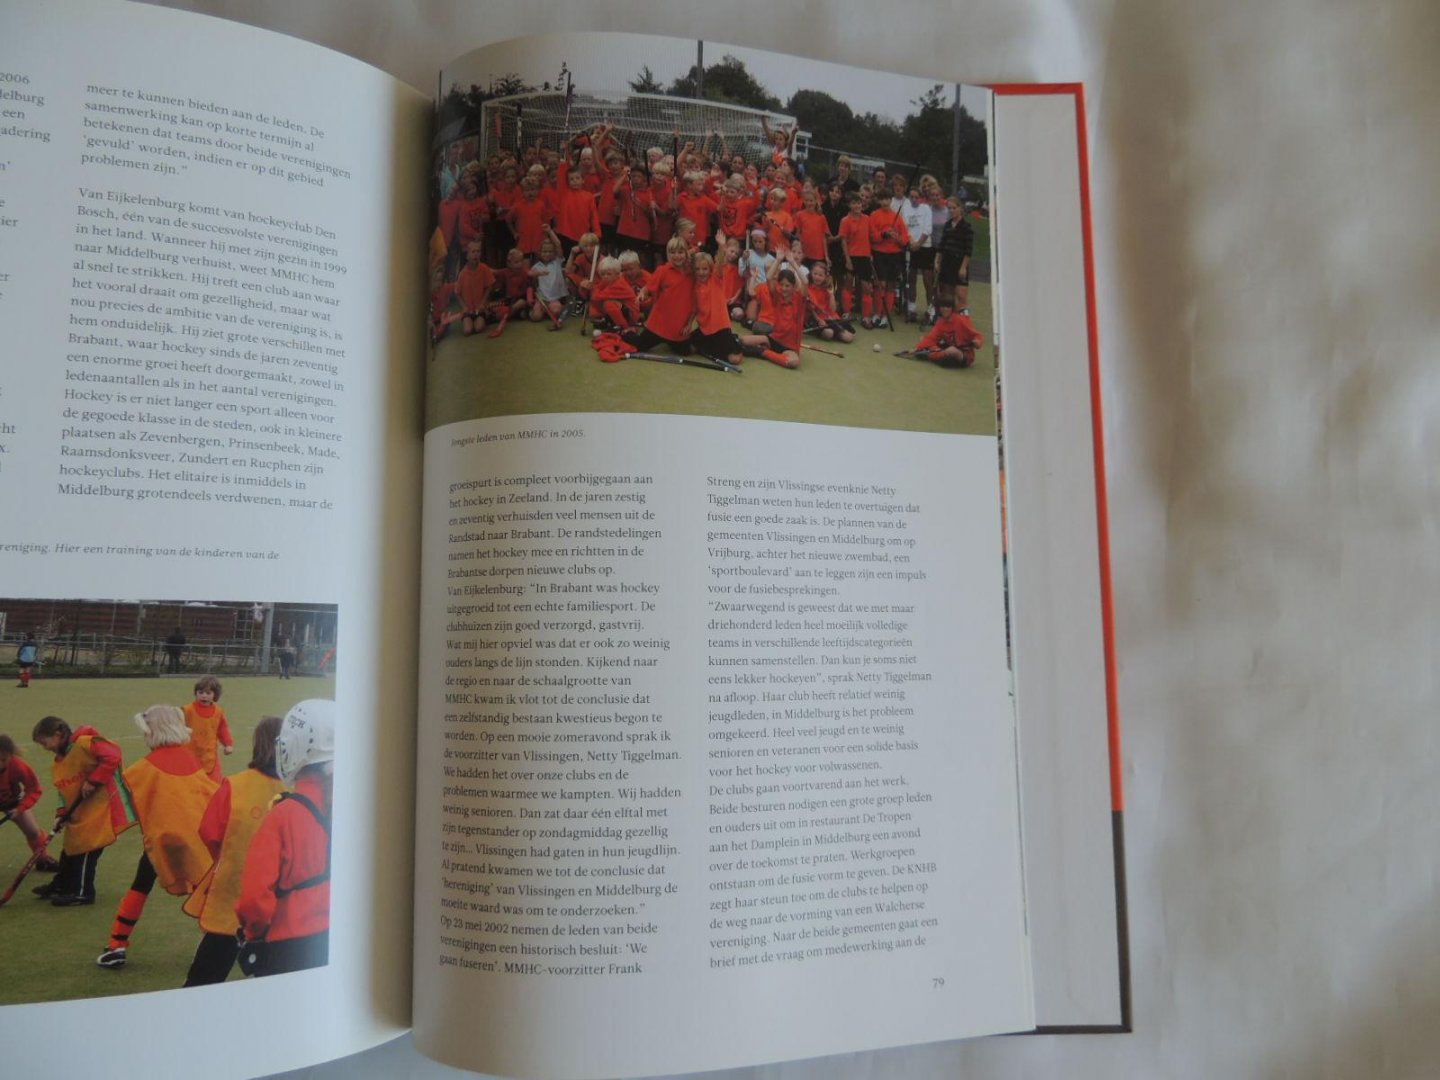 Theo Giele - Een eeuw hockey in oranje. Middelburgsche Mixed Hockey Club 1909-2011